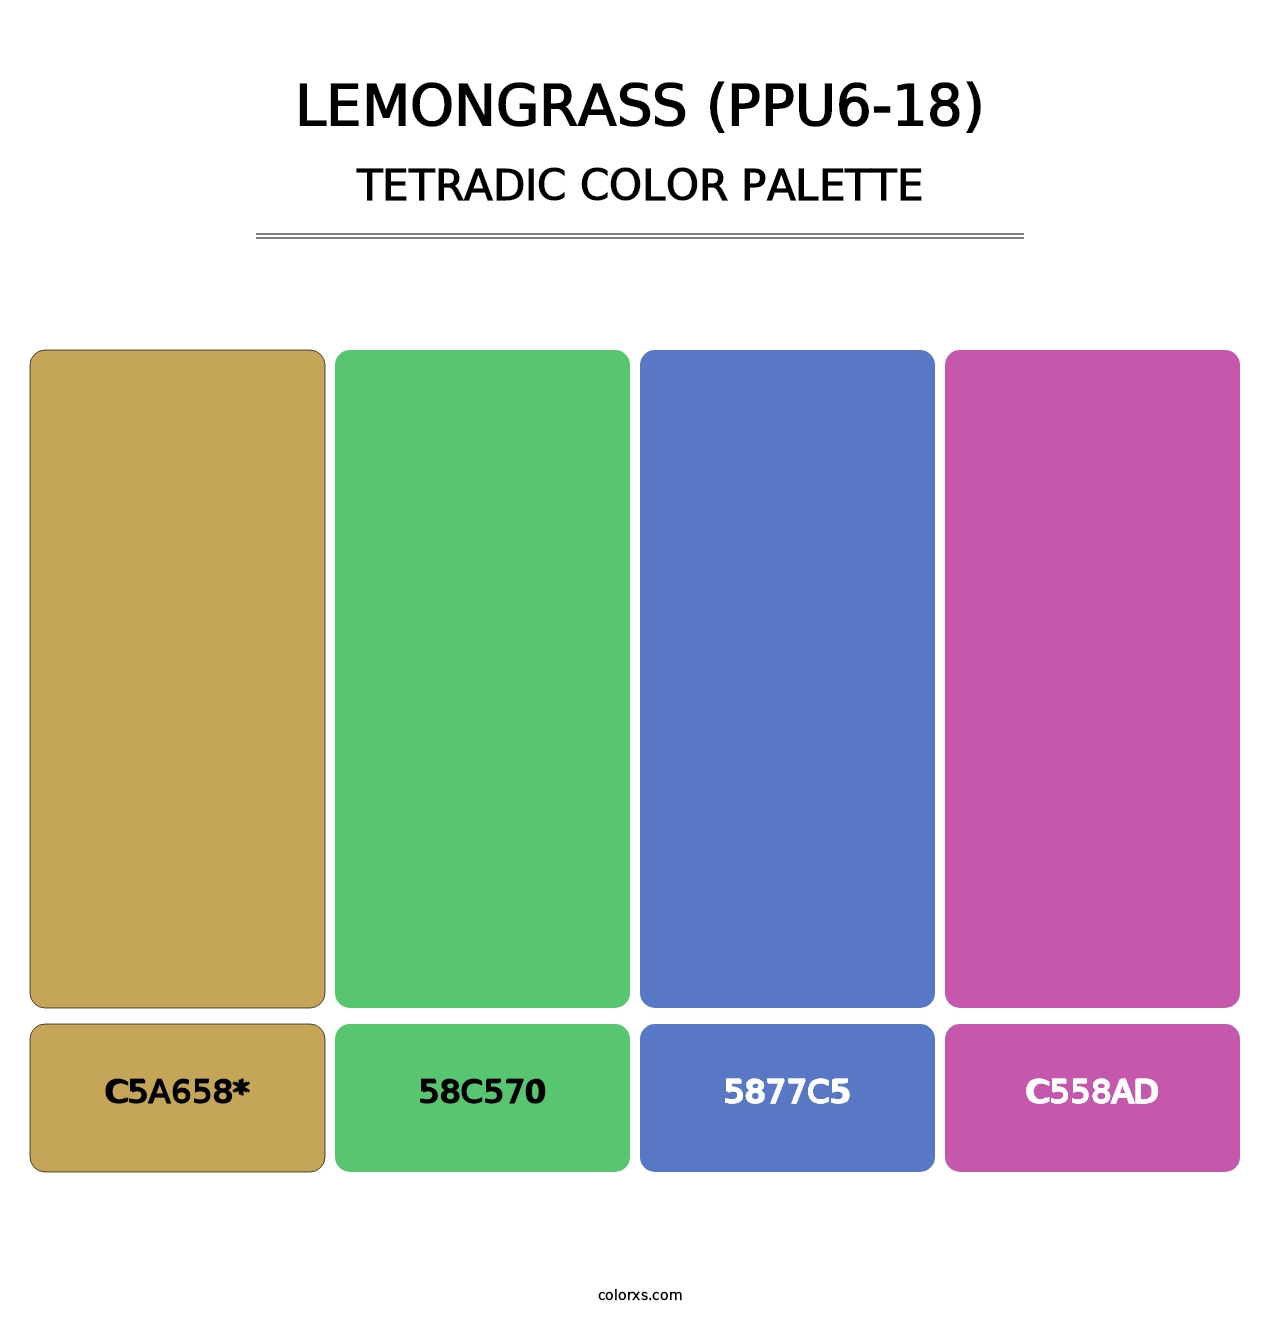 Lemongrass (PPU6-18) - Tetradic Color Palette